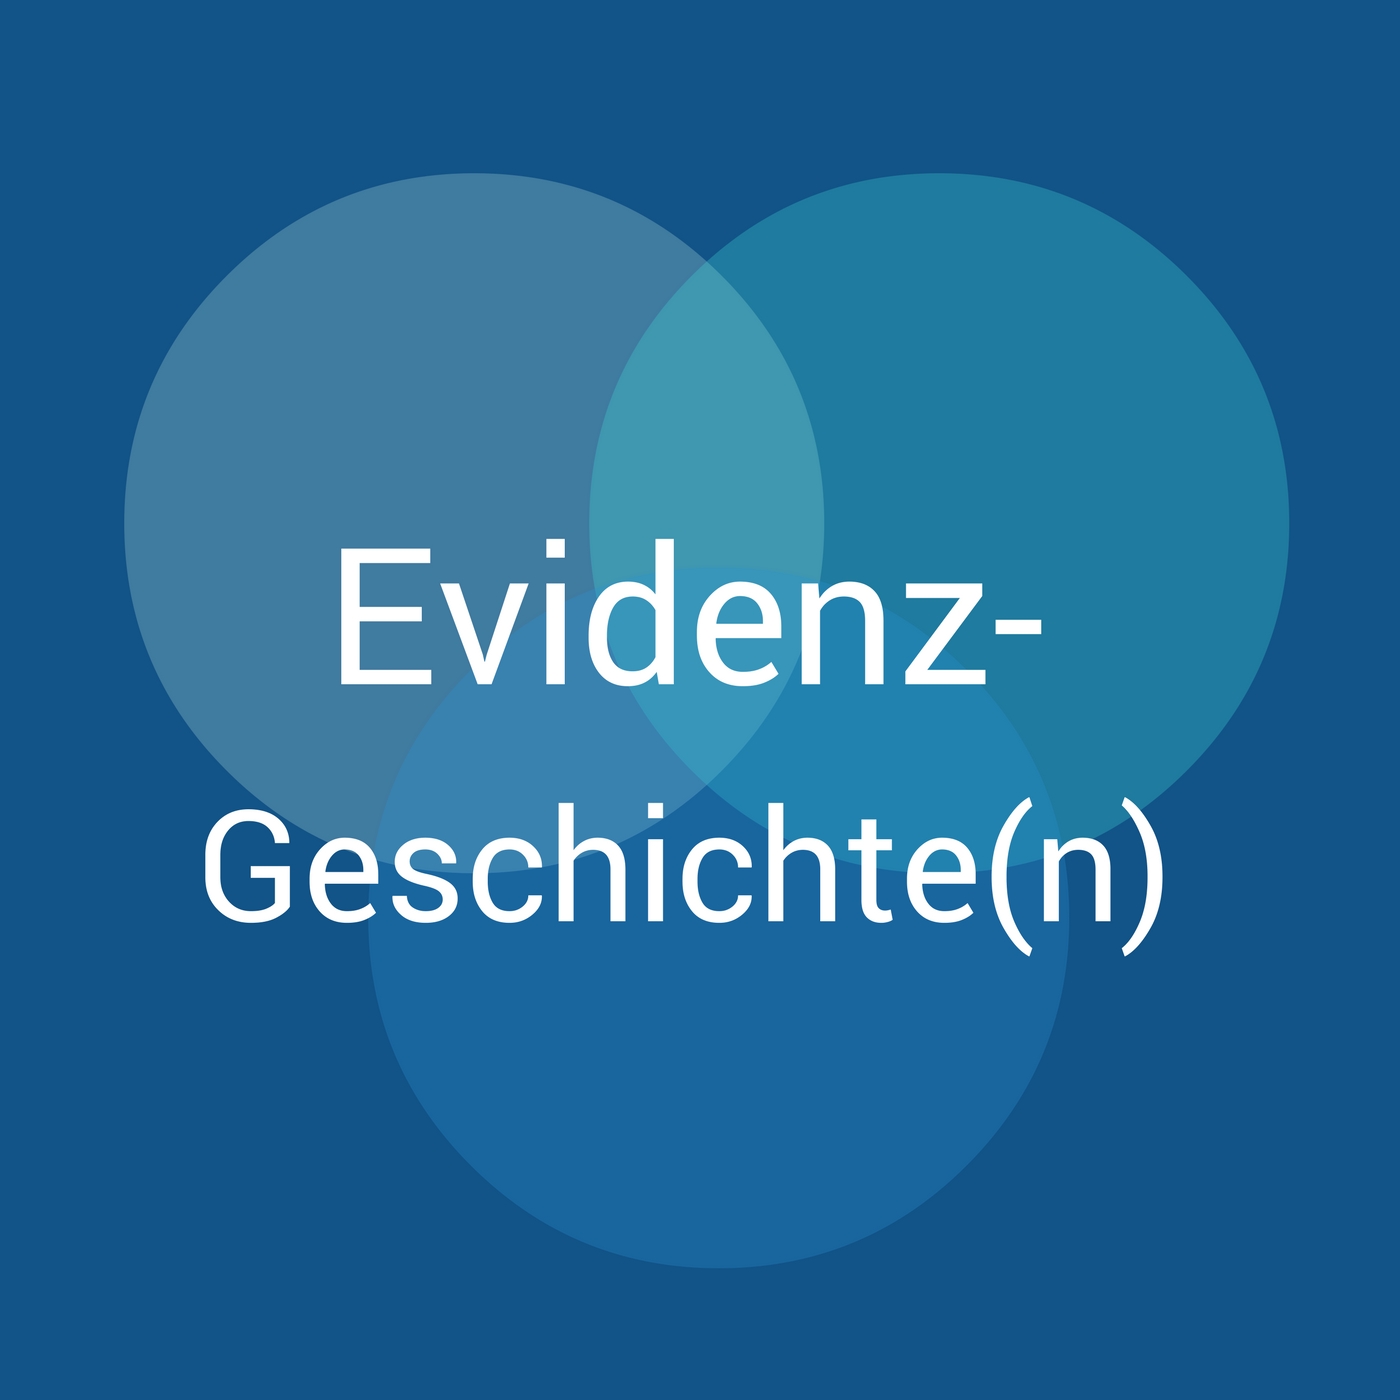 Evidenz-Geschichte(n) - Podcast